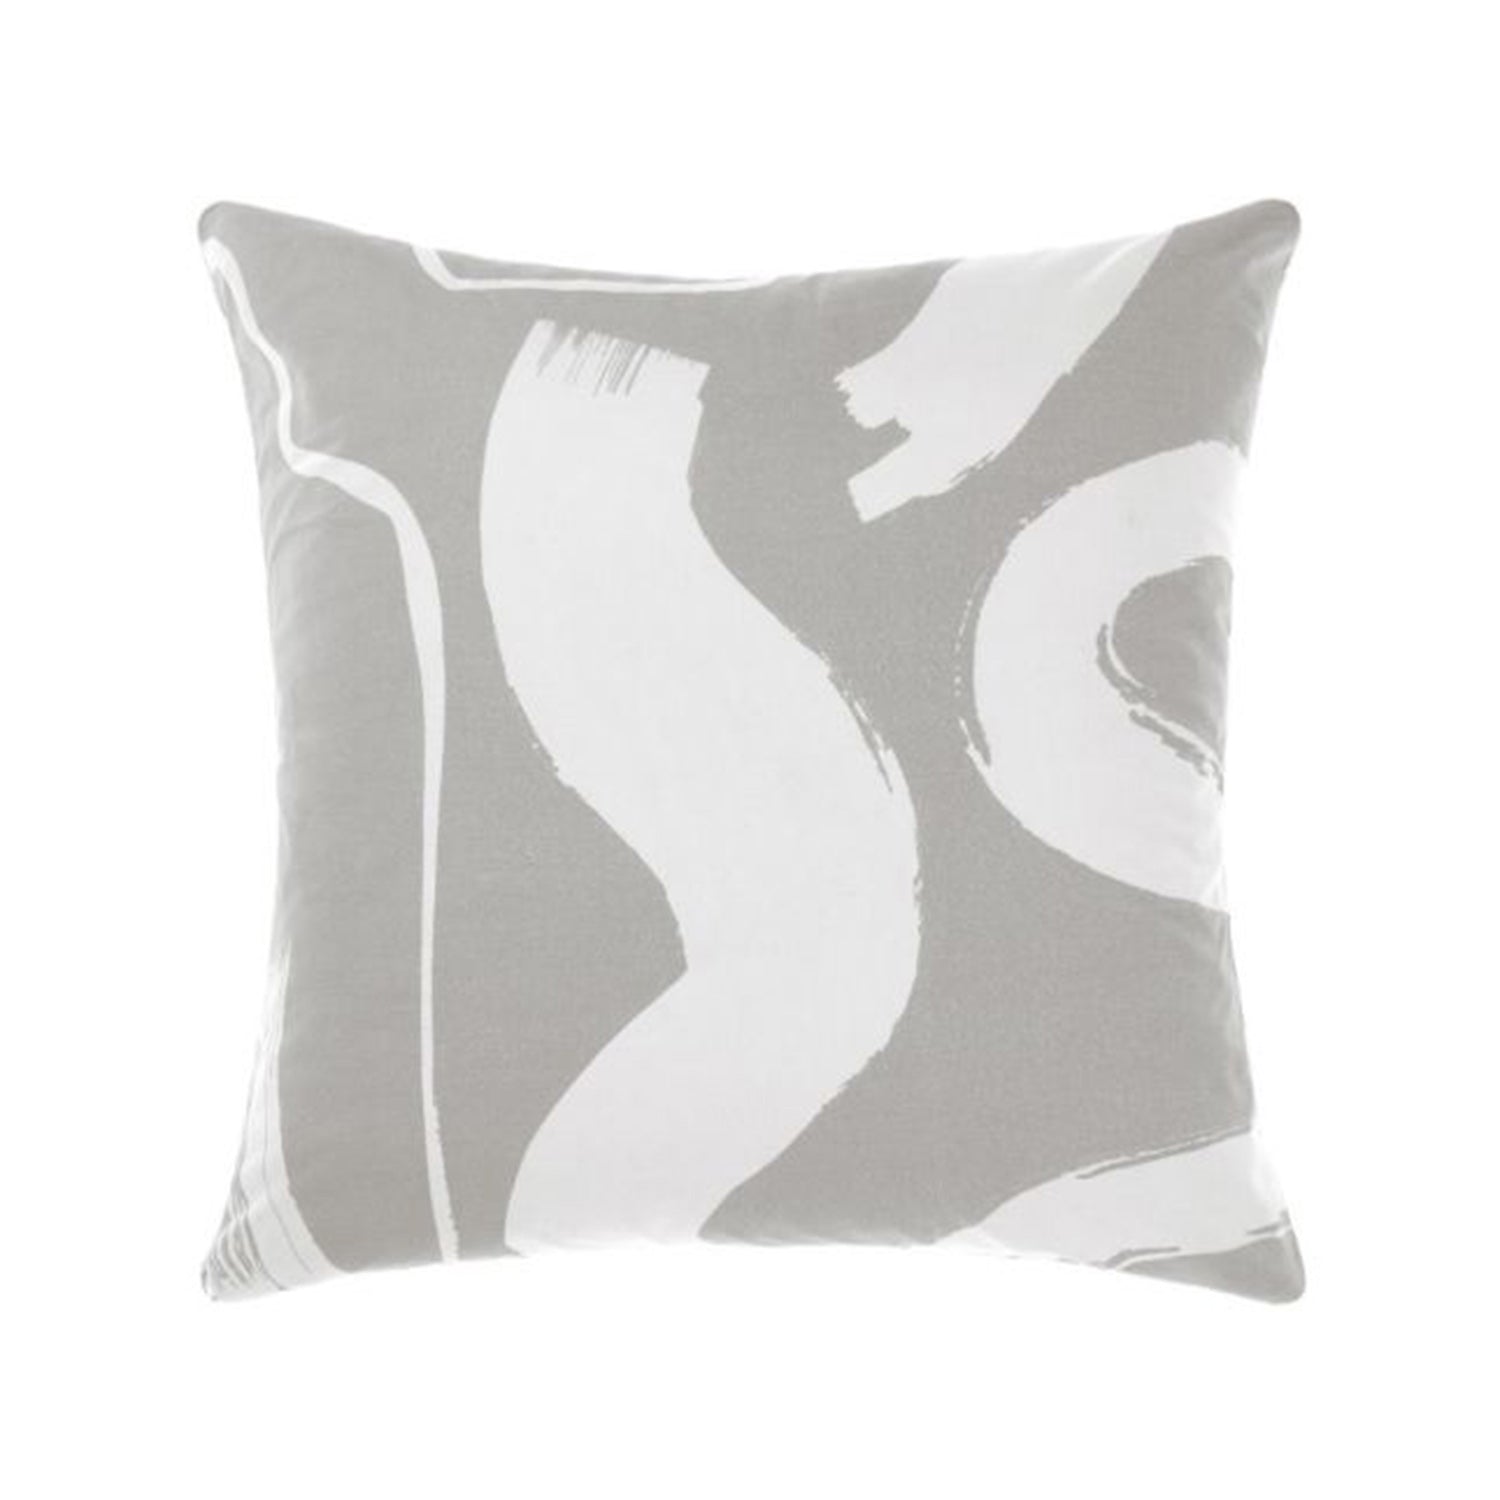 Arden Mist European Pillowcase by Linen House